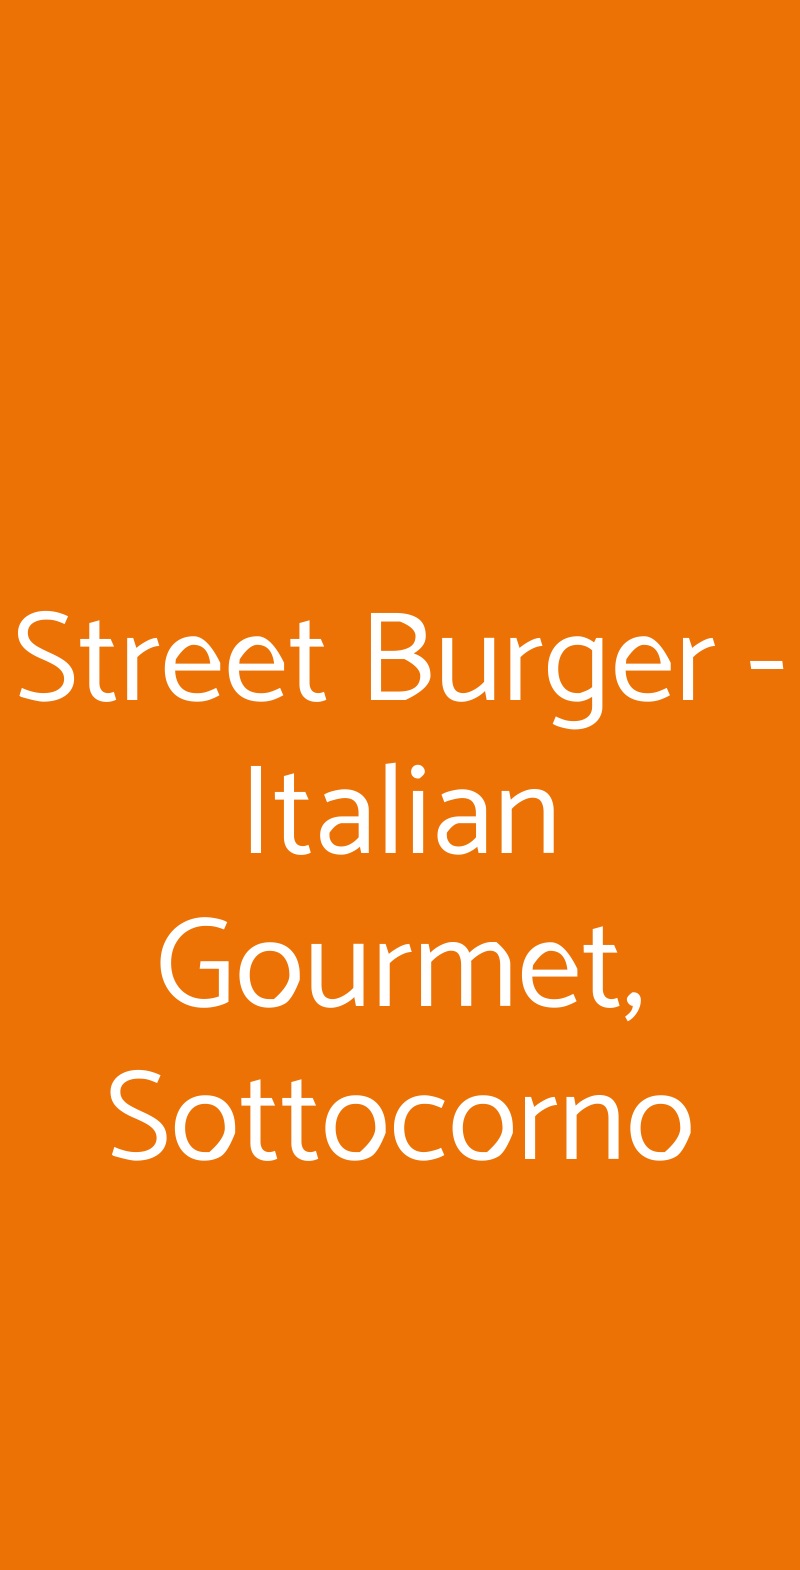 Street Burger - Italian Gourmet, Sottocorno Milano menù 1 pagina